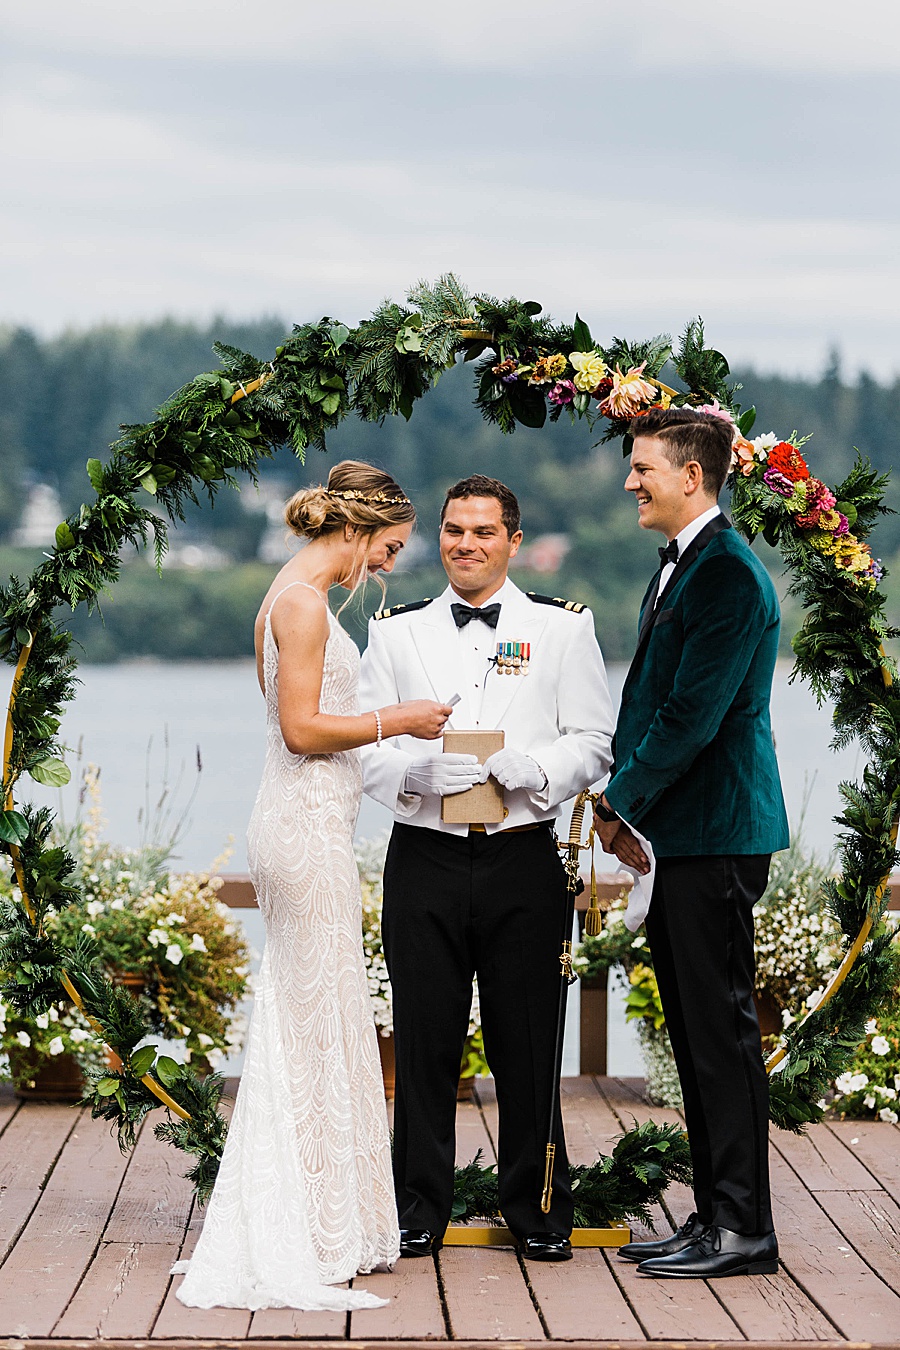 A Kiana Lodge wedding ceremony, photographed by Seattle wedding photographer Amy Galbraith